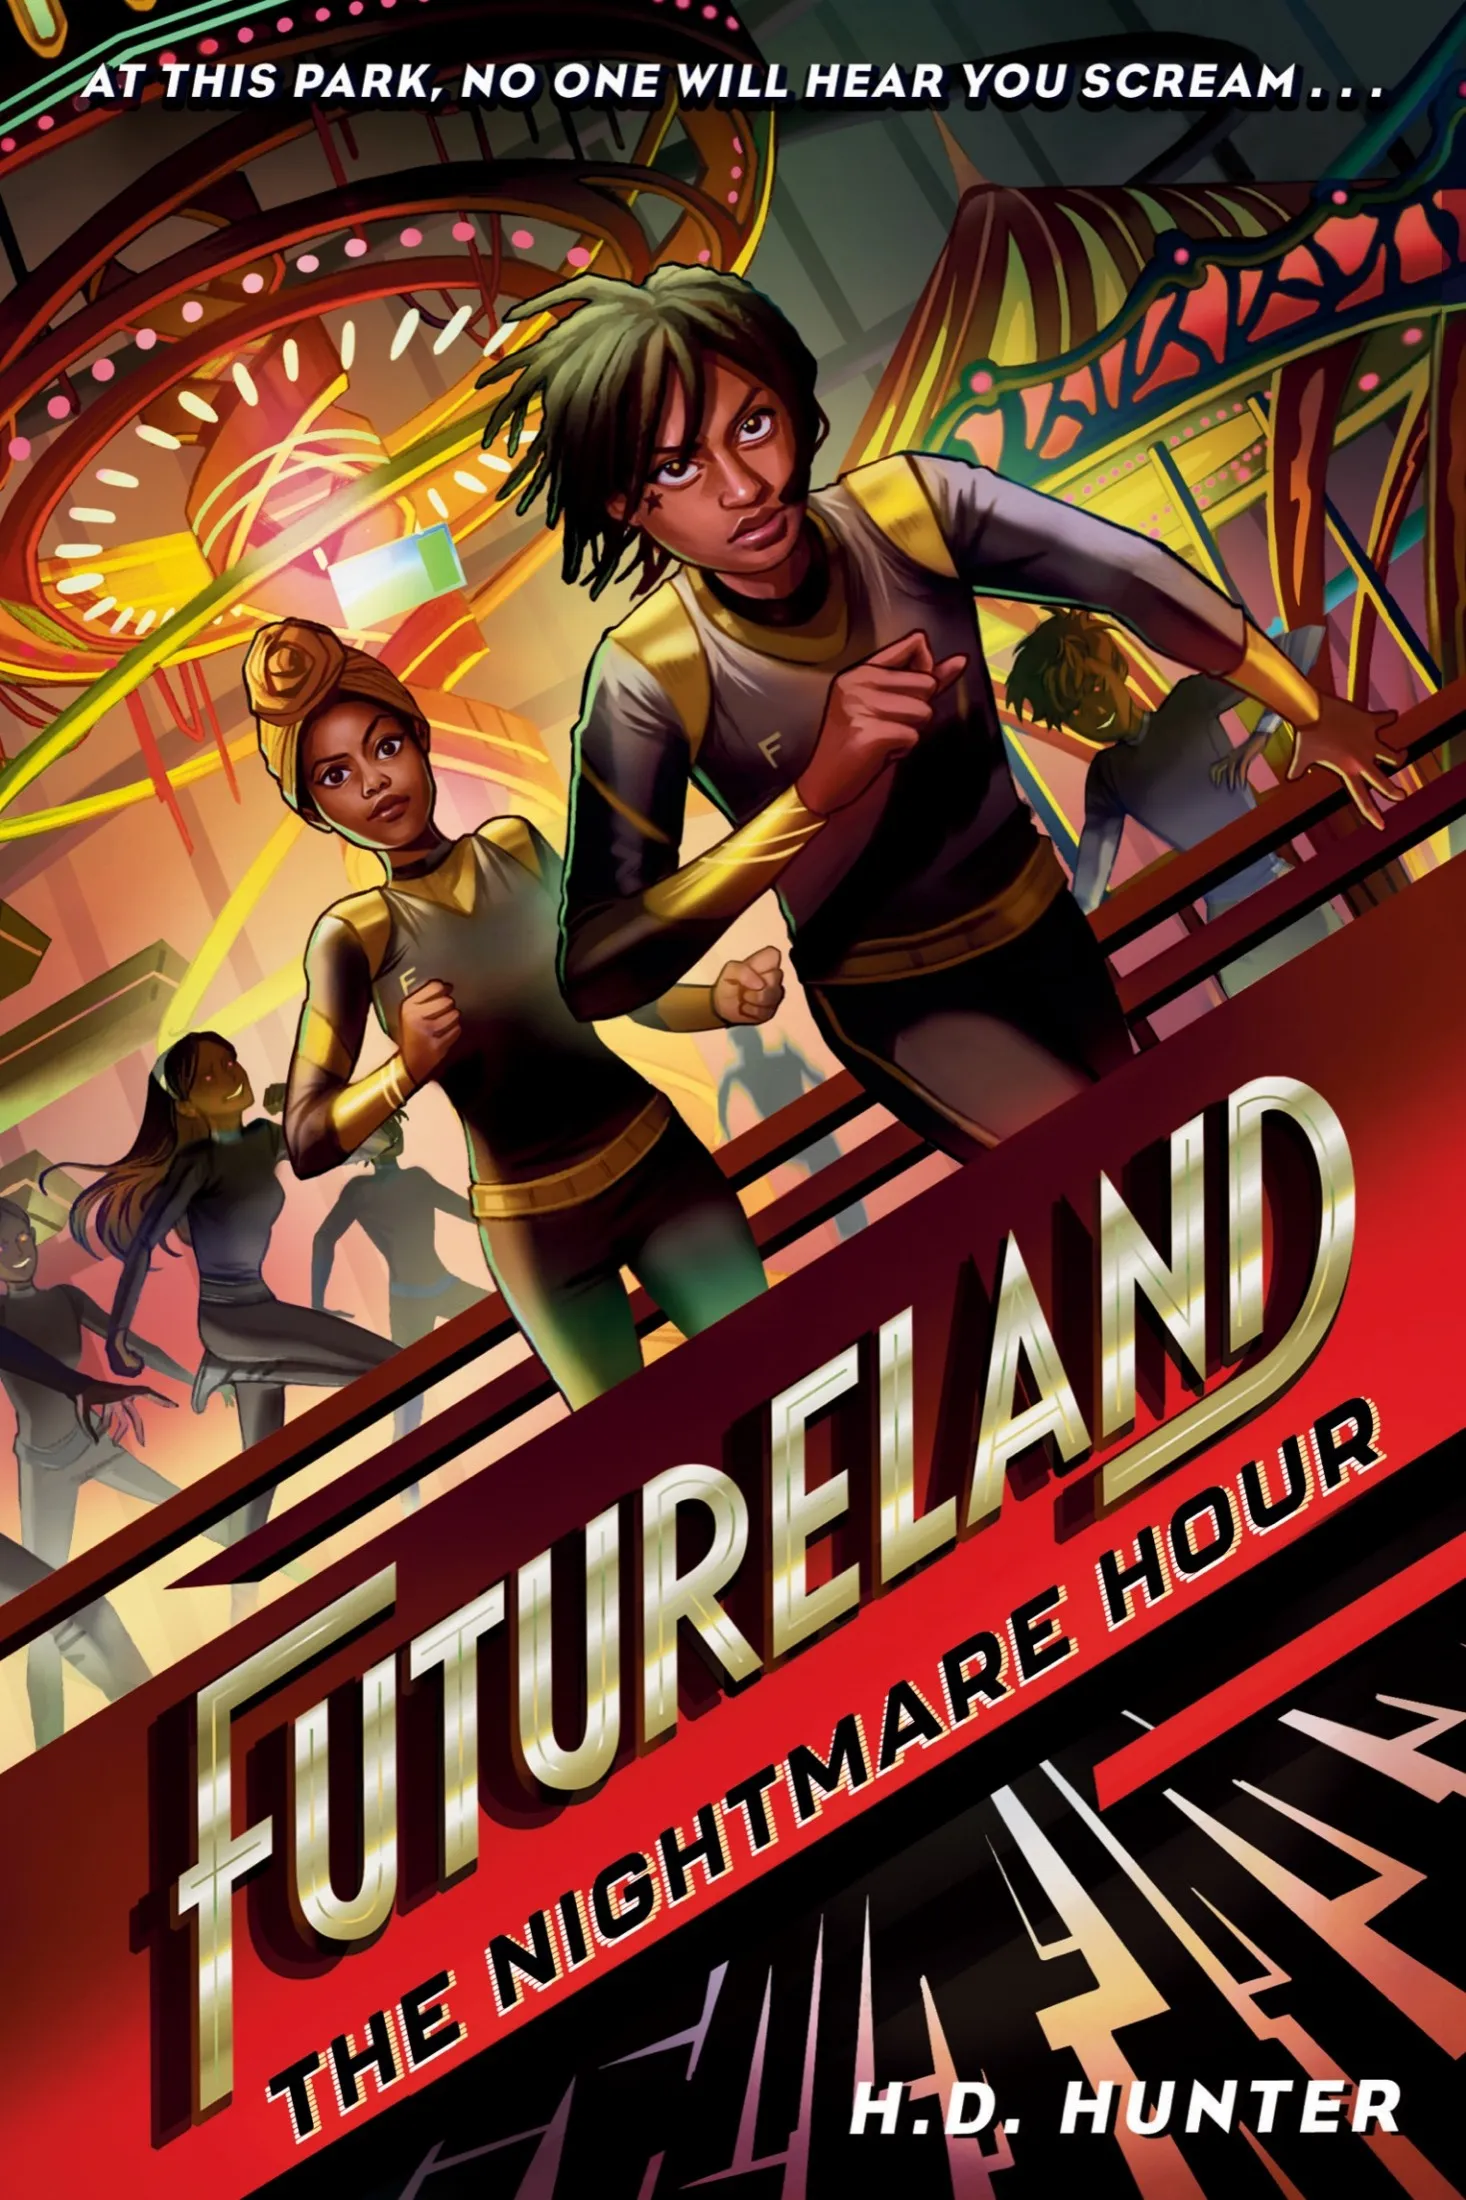 The Nightmare Hour (Futureland #2)